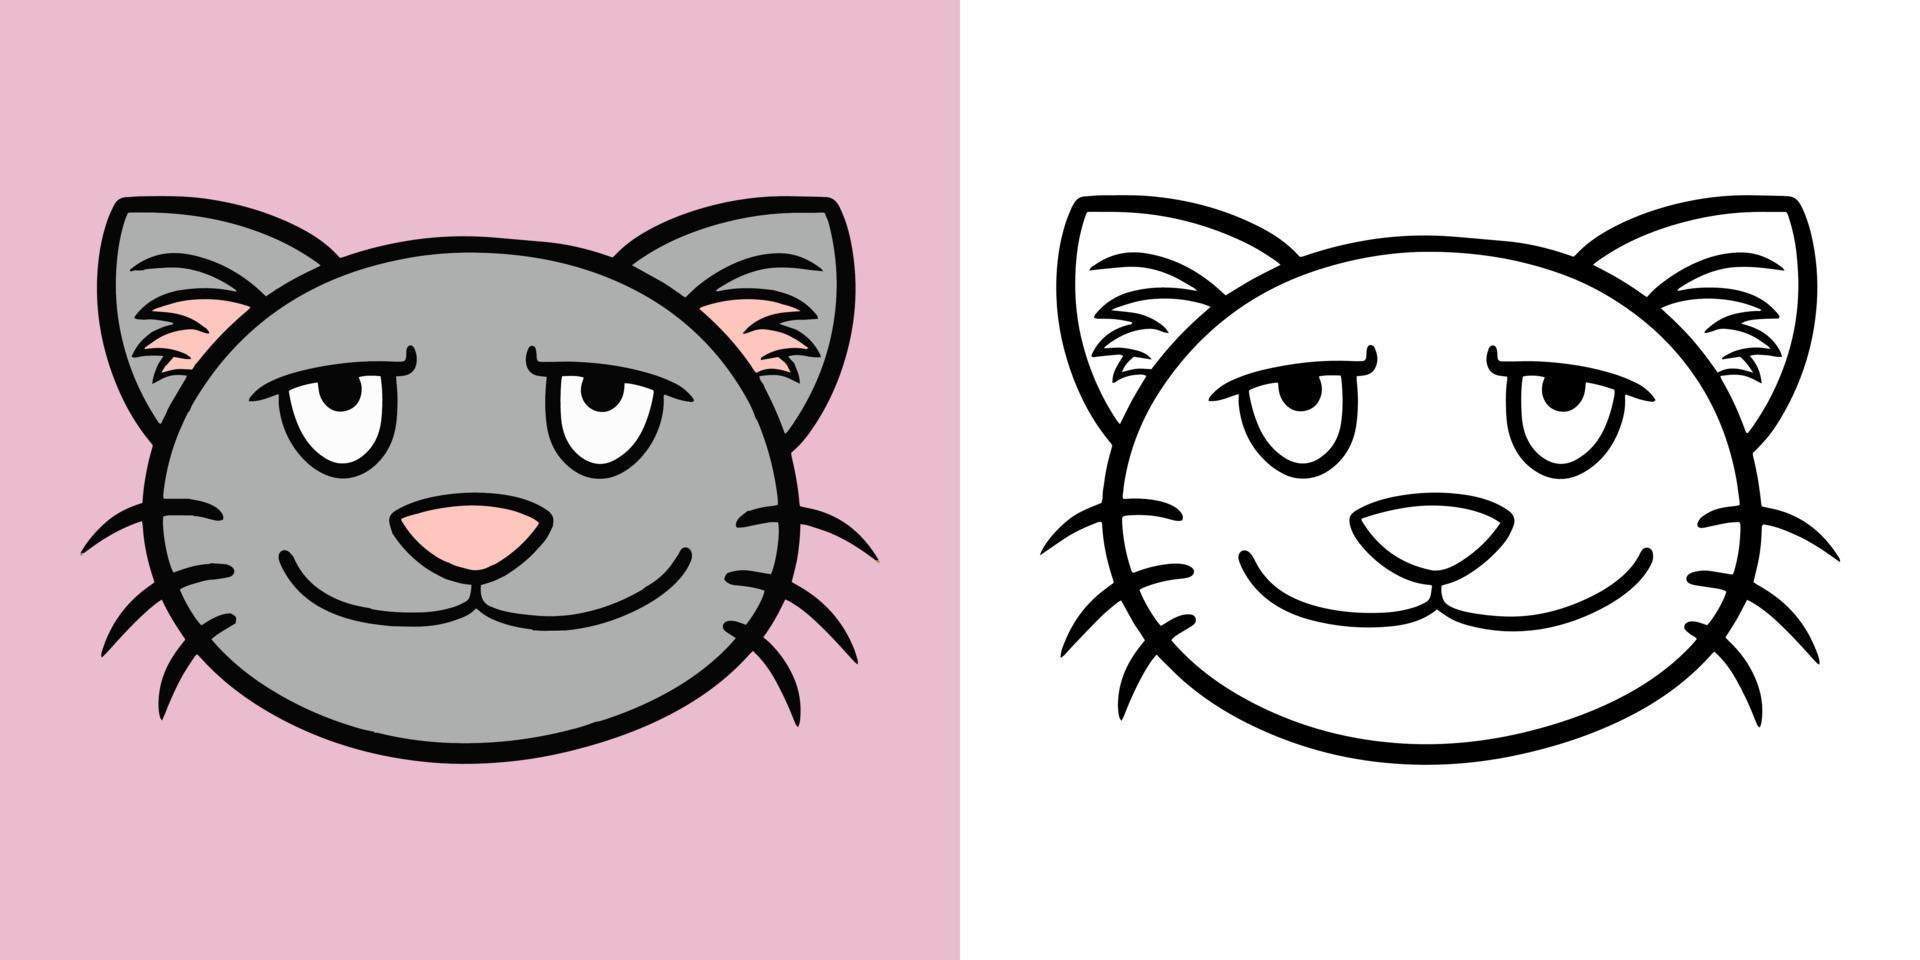 gato cinza feliz, gato sorridente, estilo cartoon, conjunto horizontal de ilustrações para livros de colorir, ilustração vetorial vetor